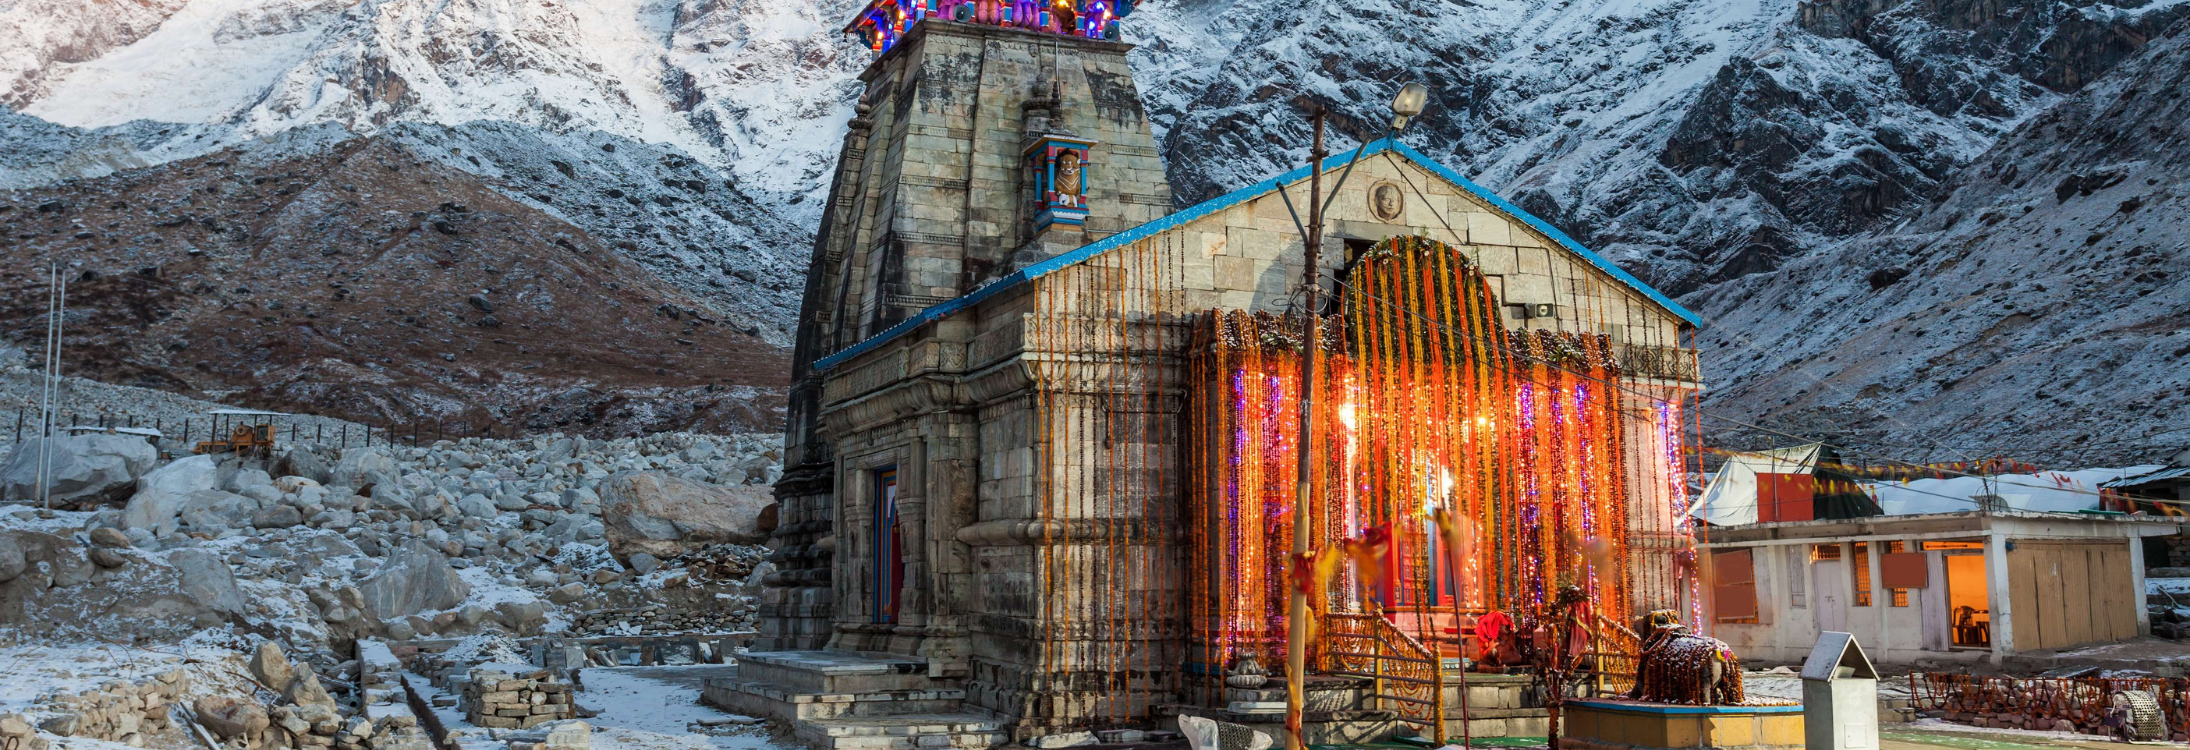 Photos that sum up the beauty of Kedarnath